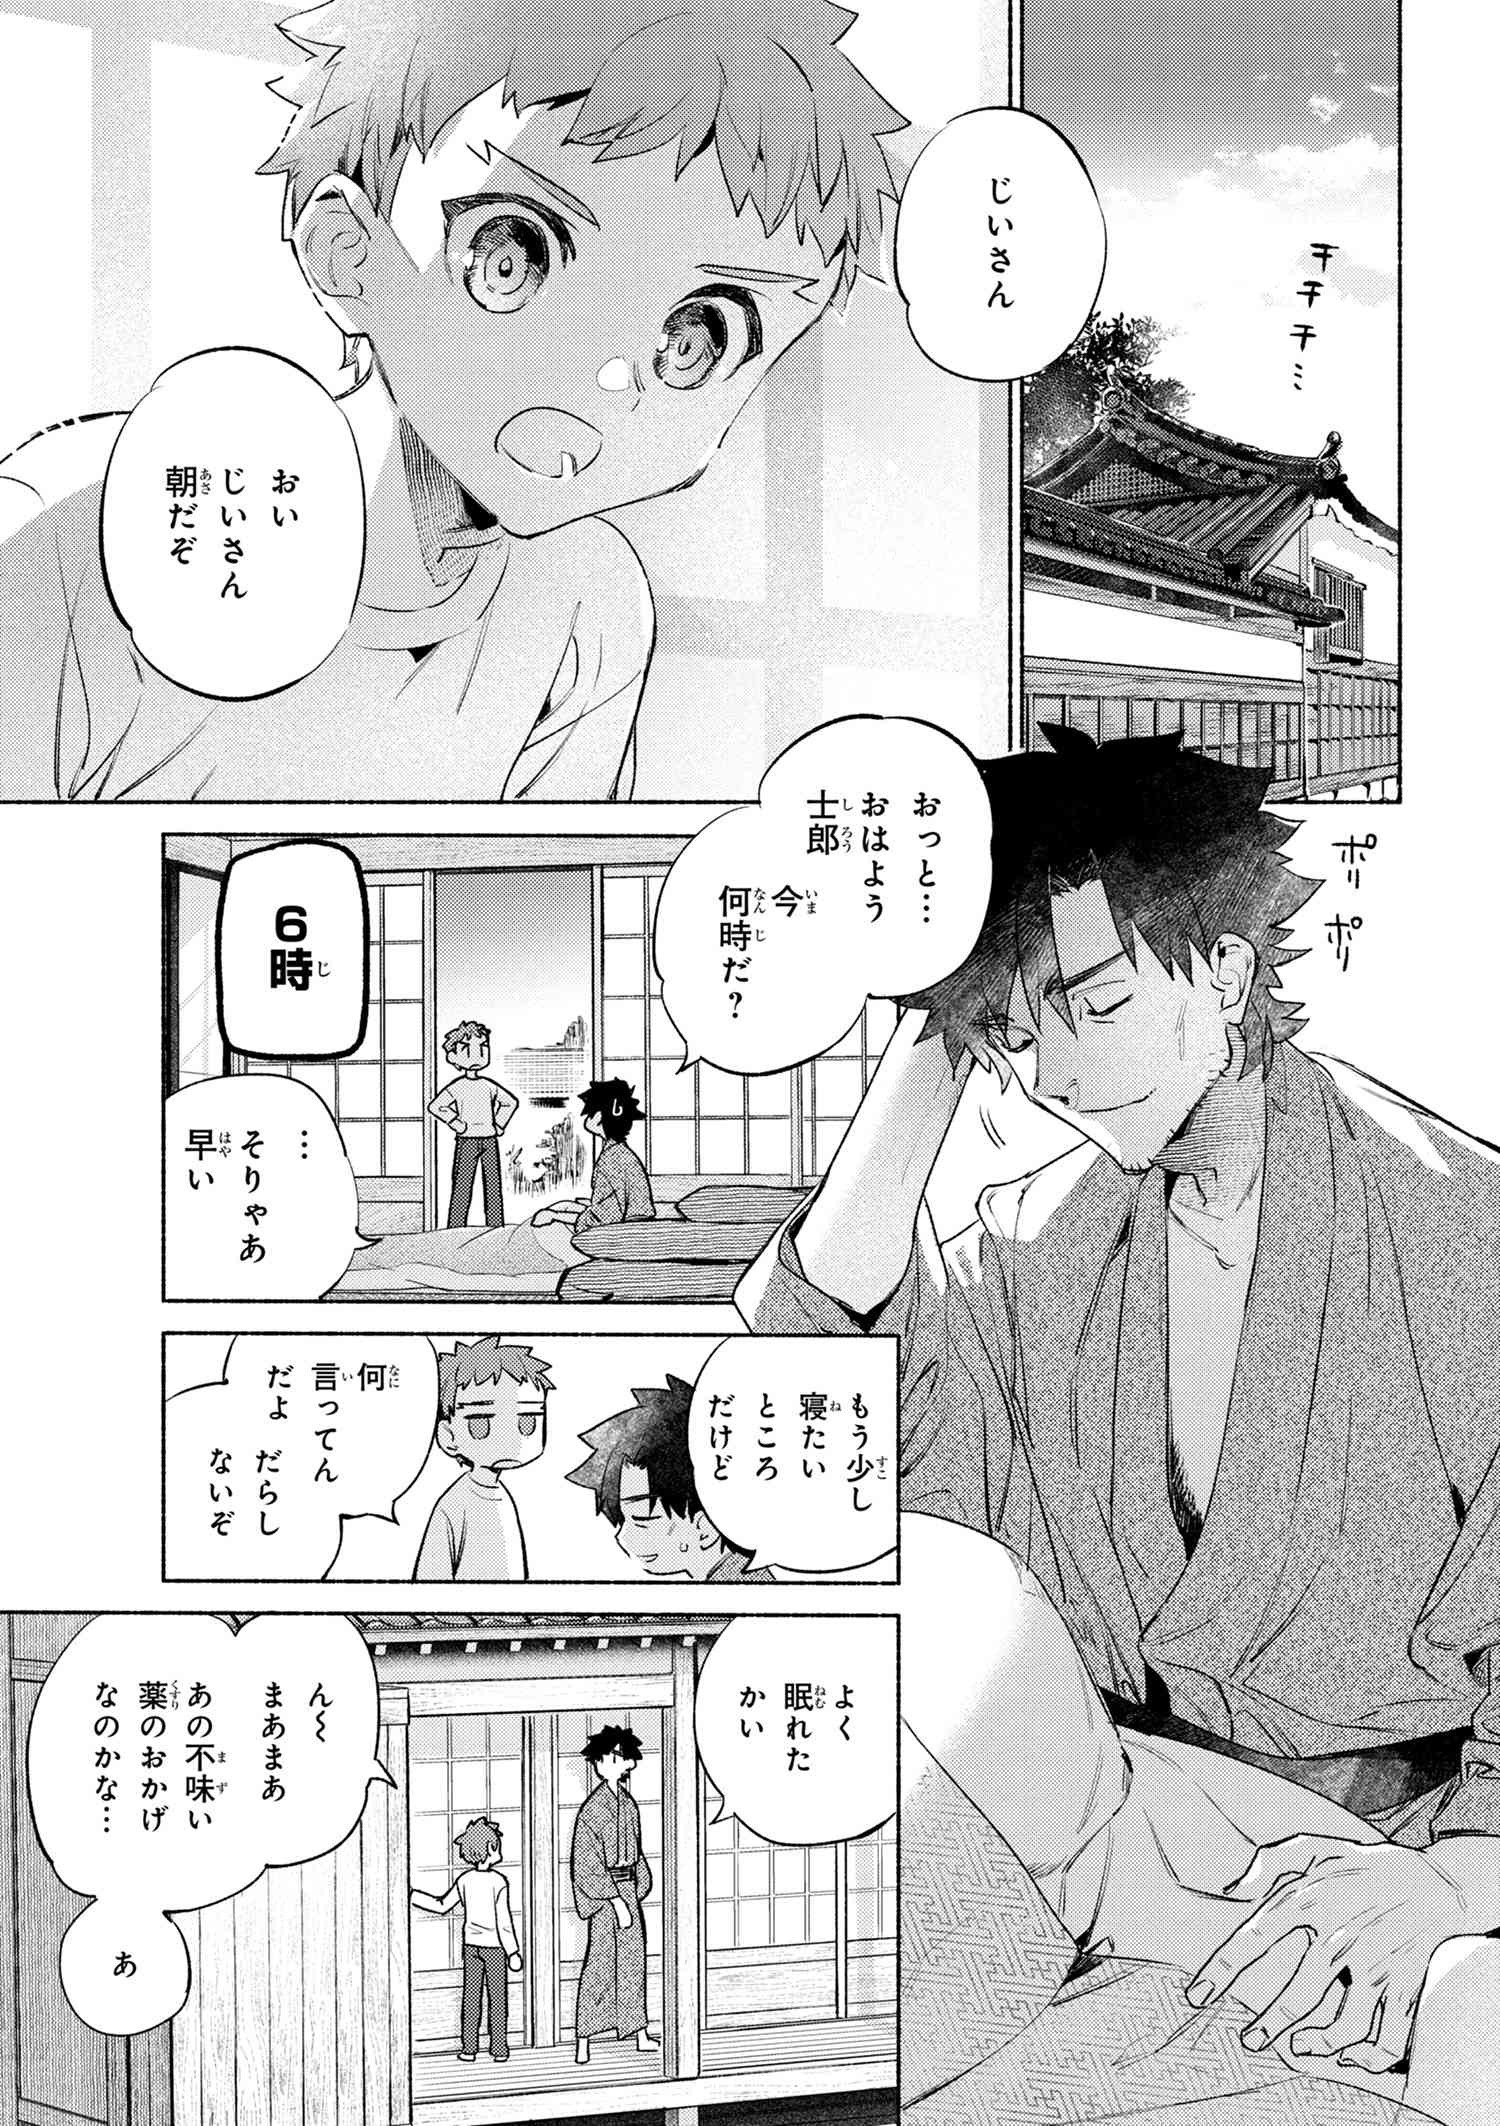 Emiya-san Chi no Kyou no Gohan - Chapter 53 - Page 3